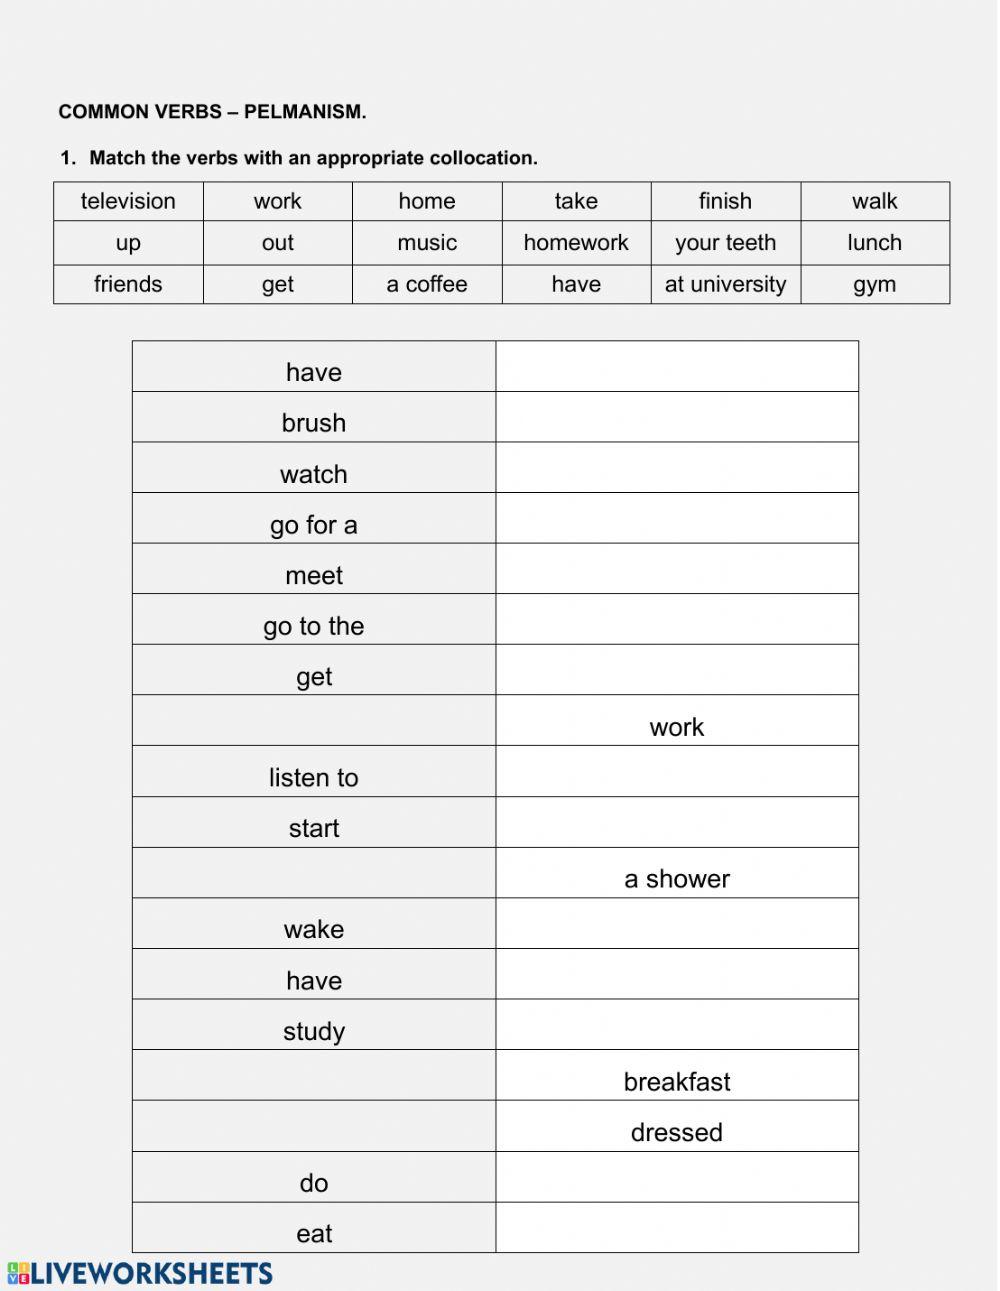 Common verbs - pelmanism A4